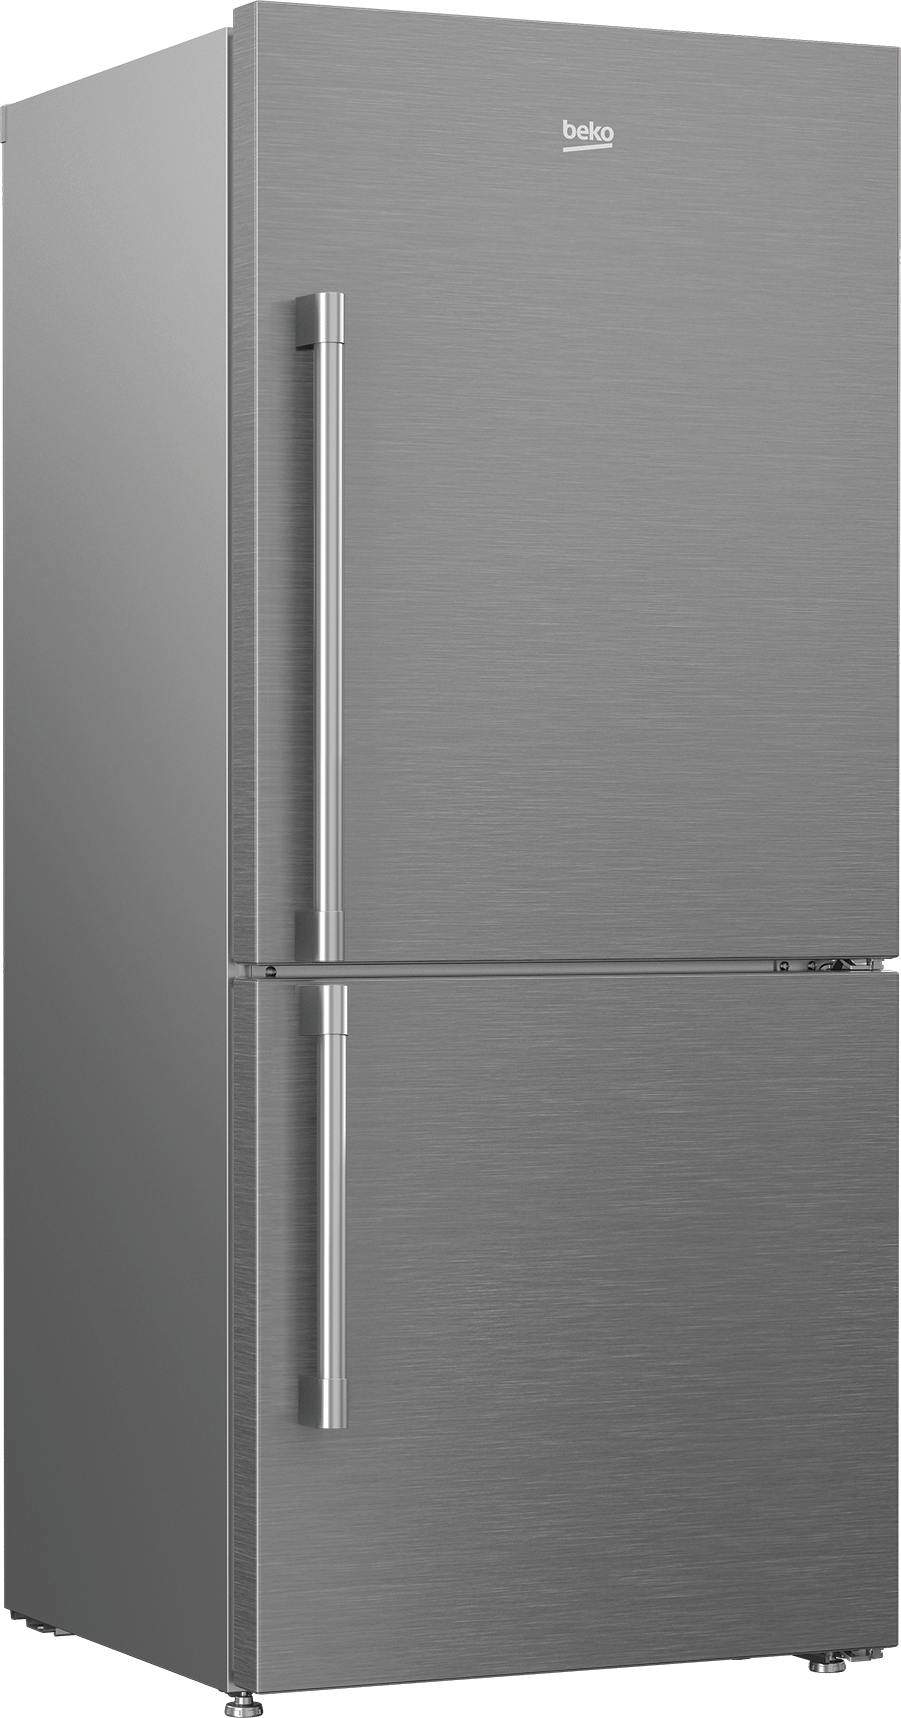 30" Freezer Bottom Stainless Steel Refrigerator with Auto Ice Maker